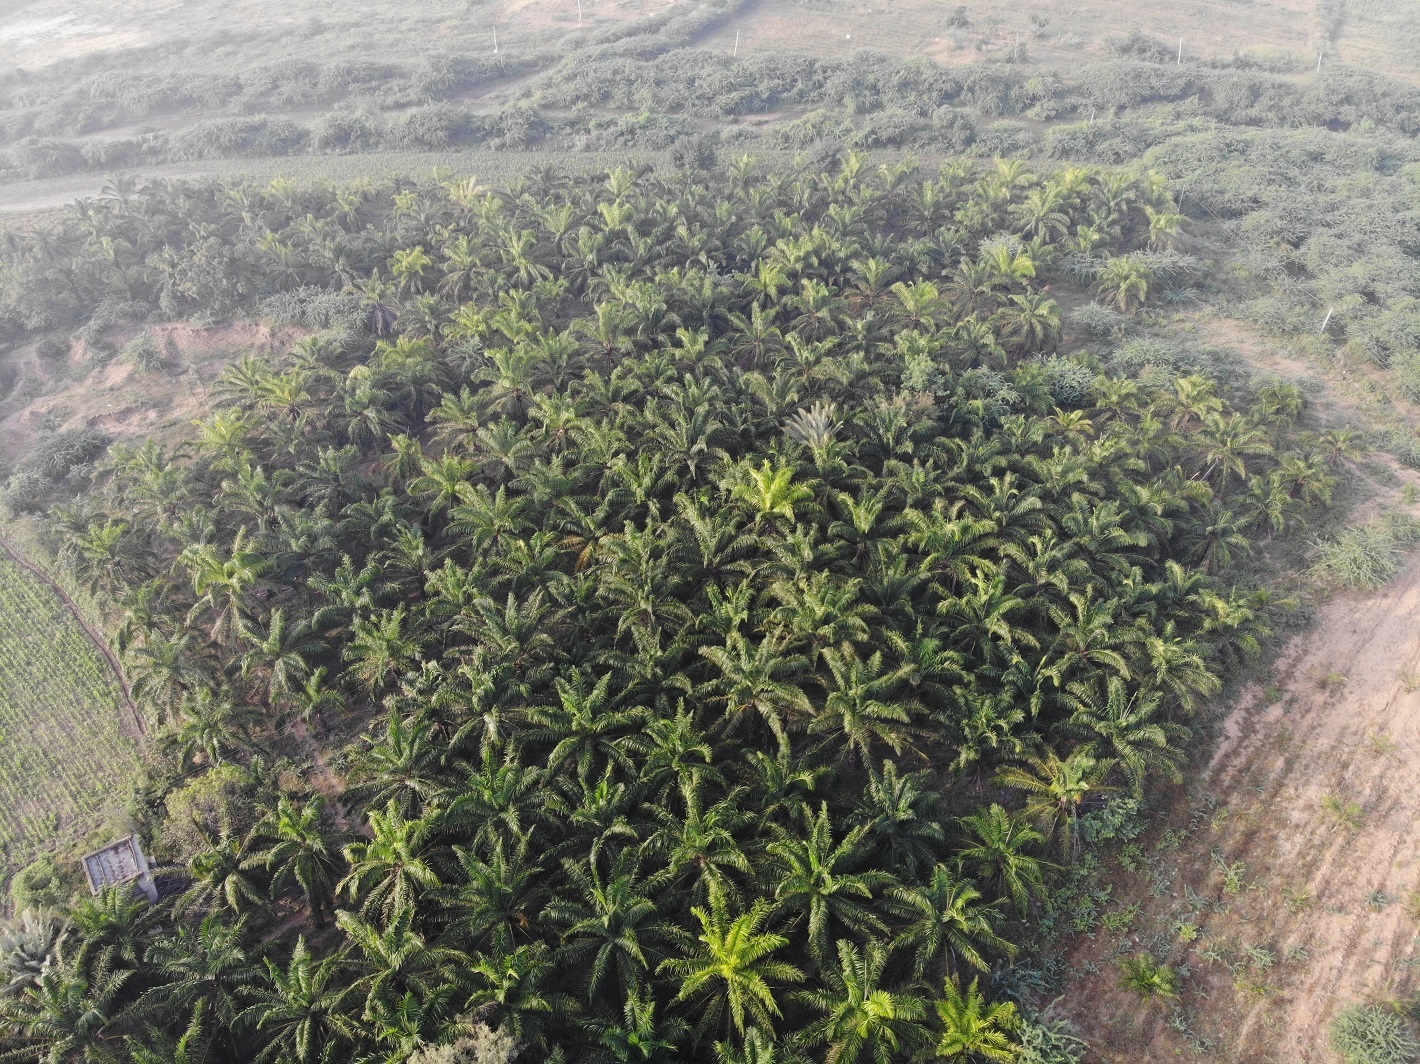 DEAL Foundation farm with palm trees Mevundi Gadag district. 27 April, 2020. 13:38